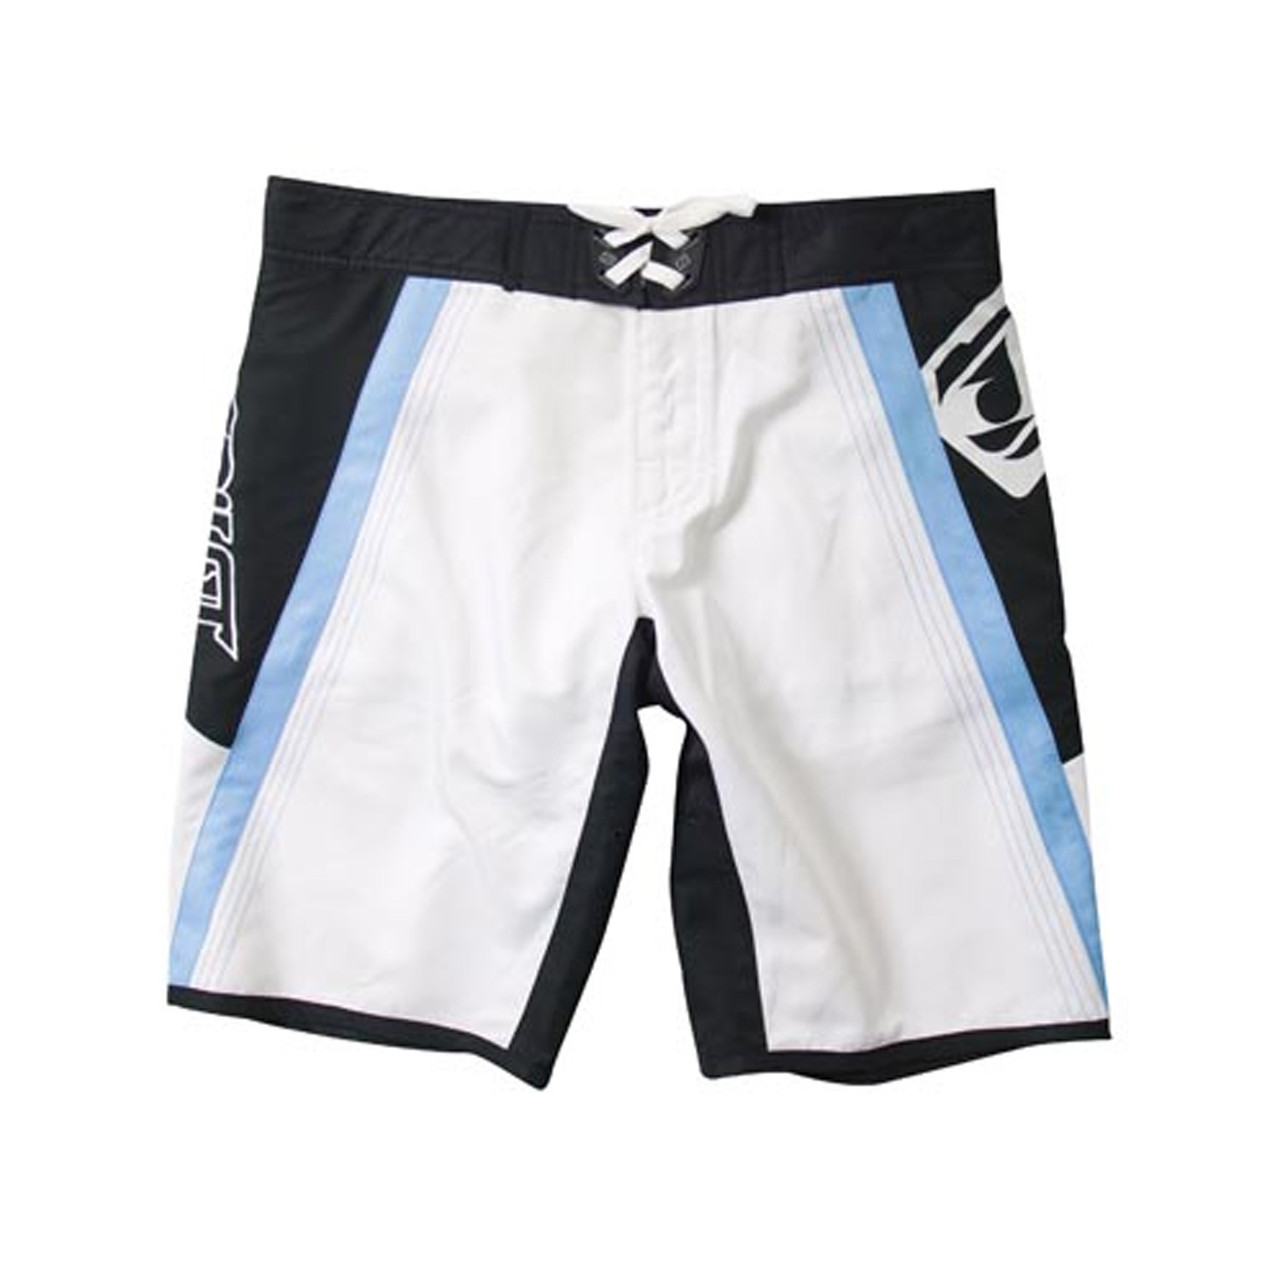 Jet Pilot Women's Rebound Ride Shorts Swim Suit Trunks Blue/White/Black Size 1